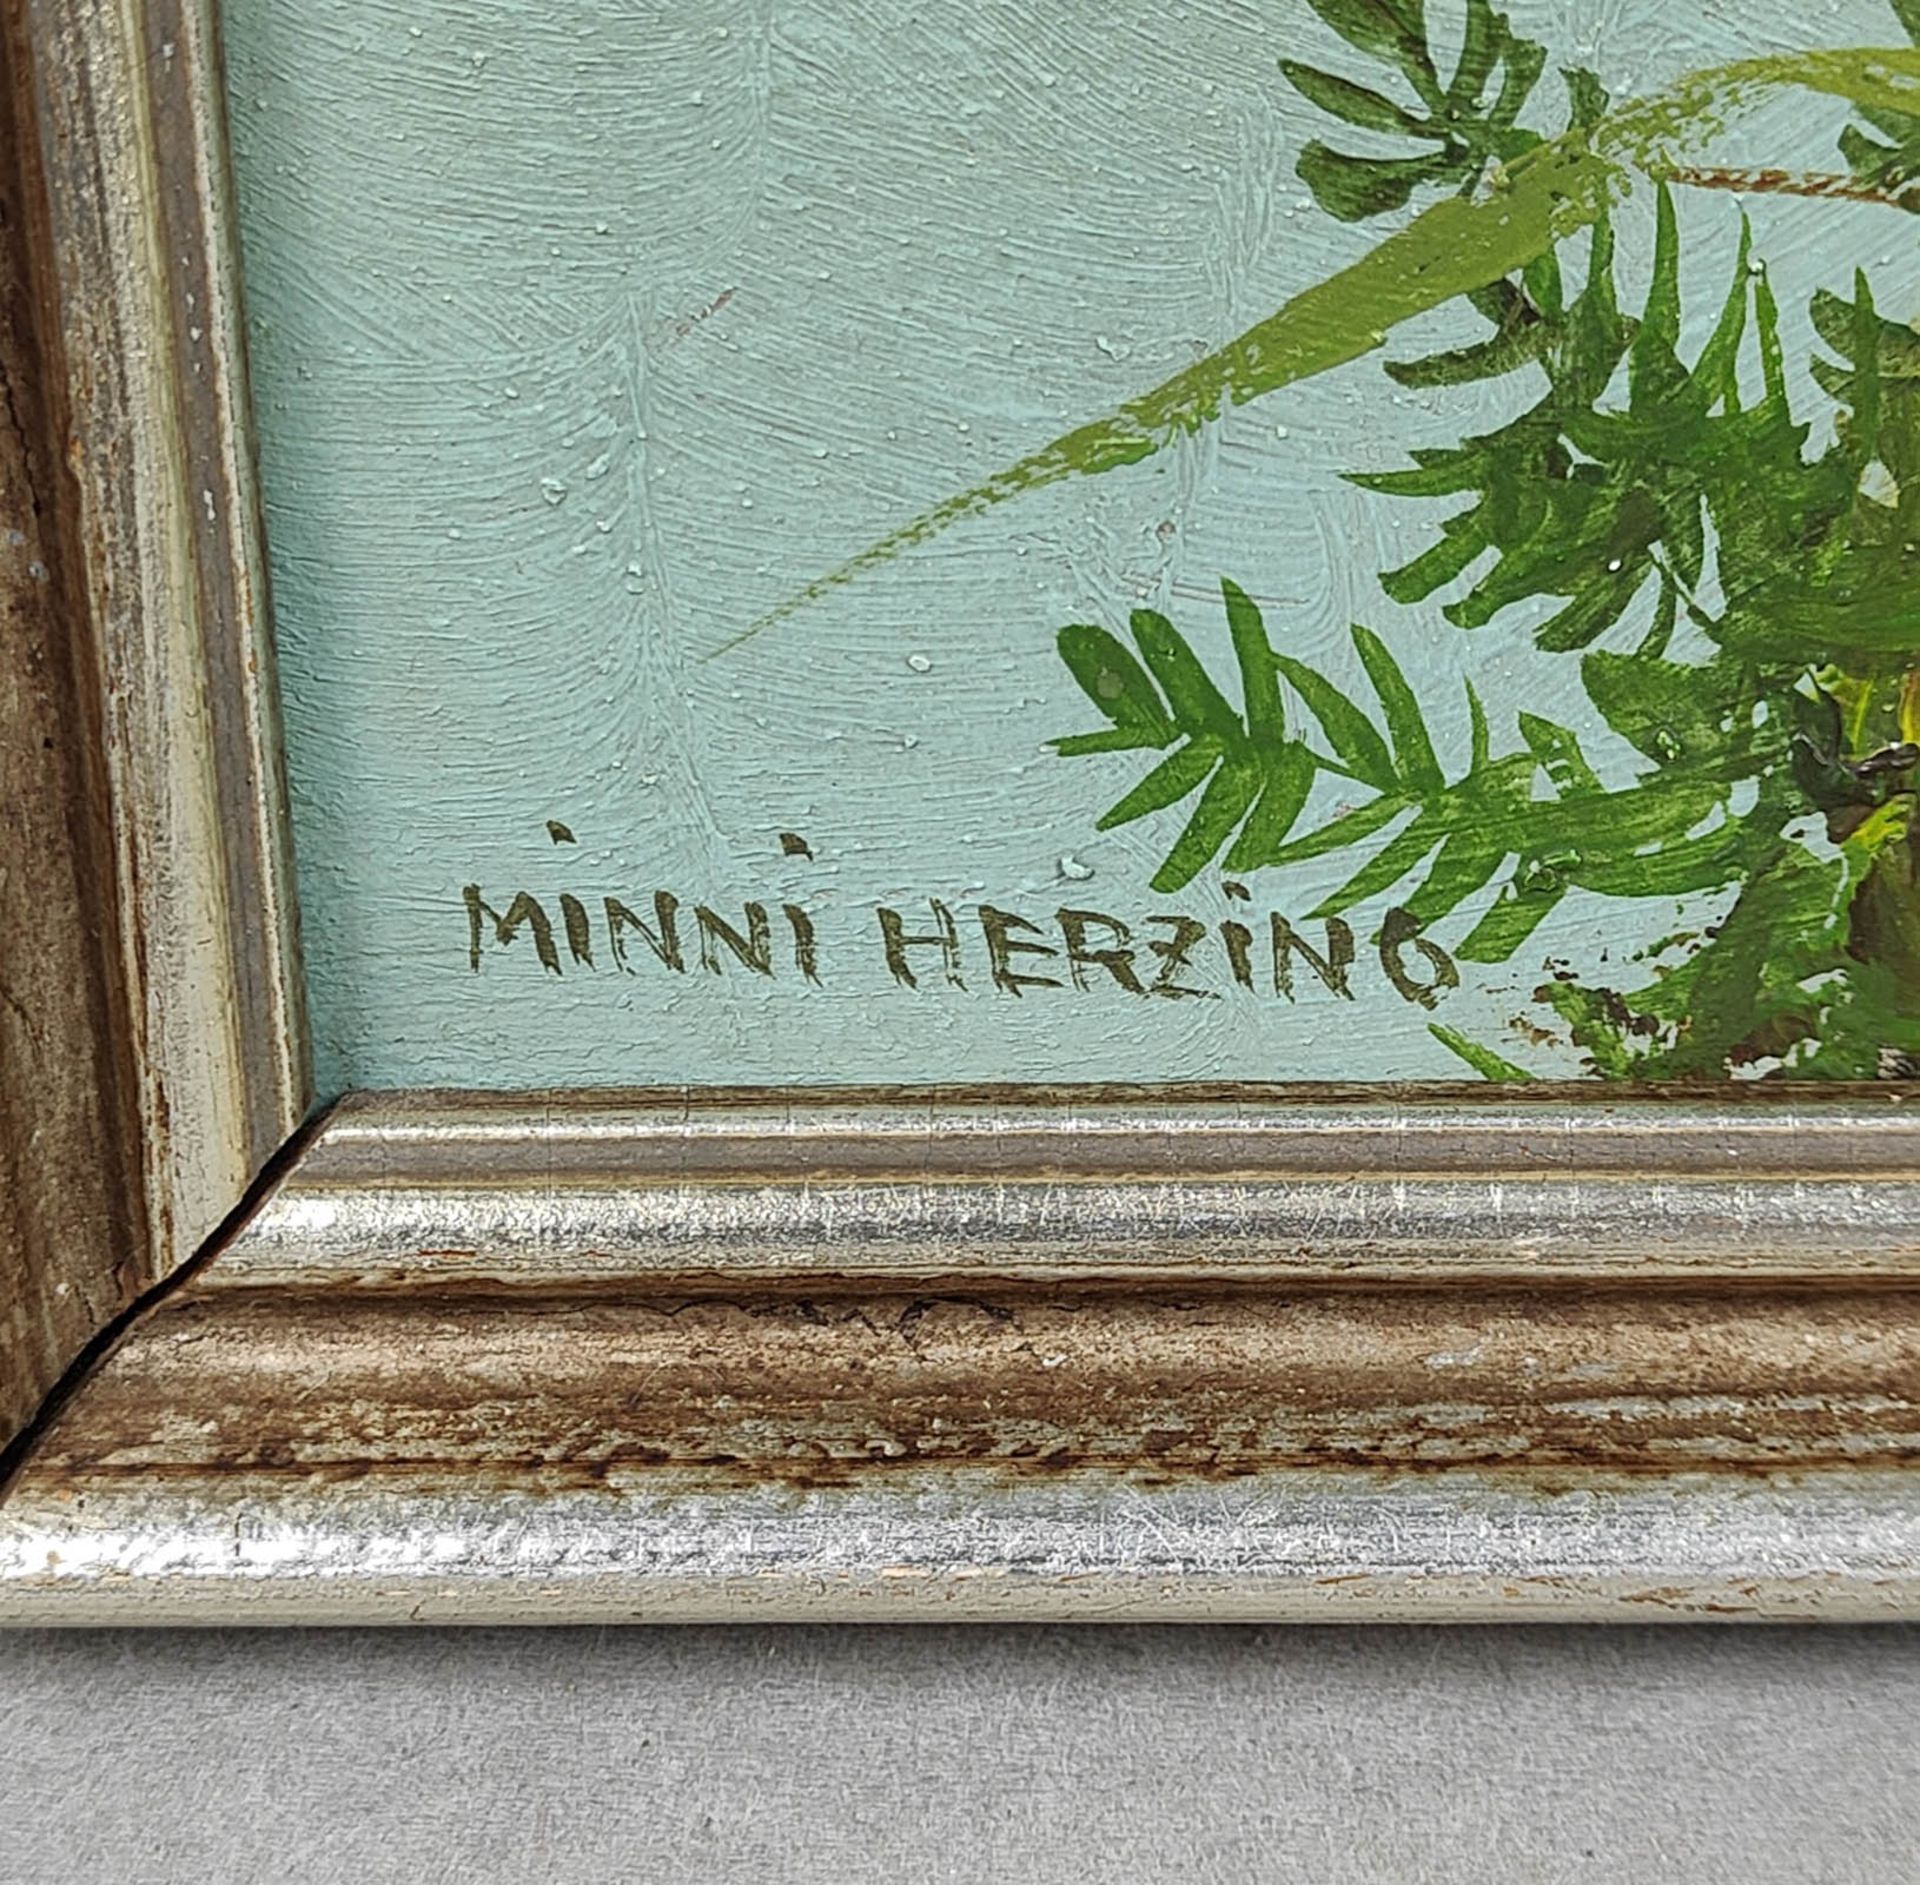 Alpenblumen - Herzing, Minni - Bild 2 aus 2